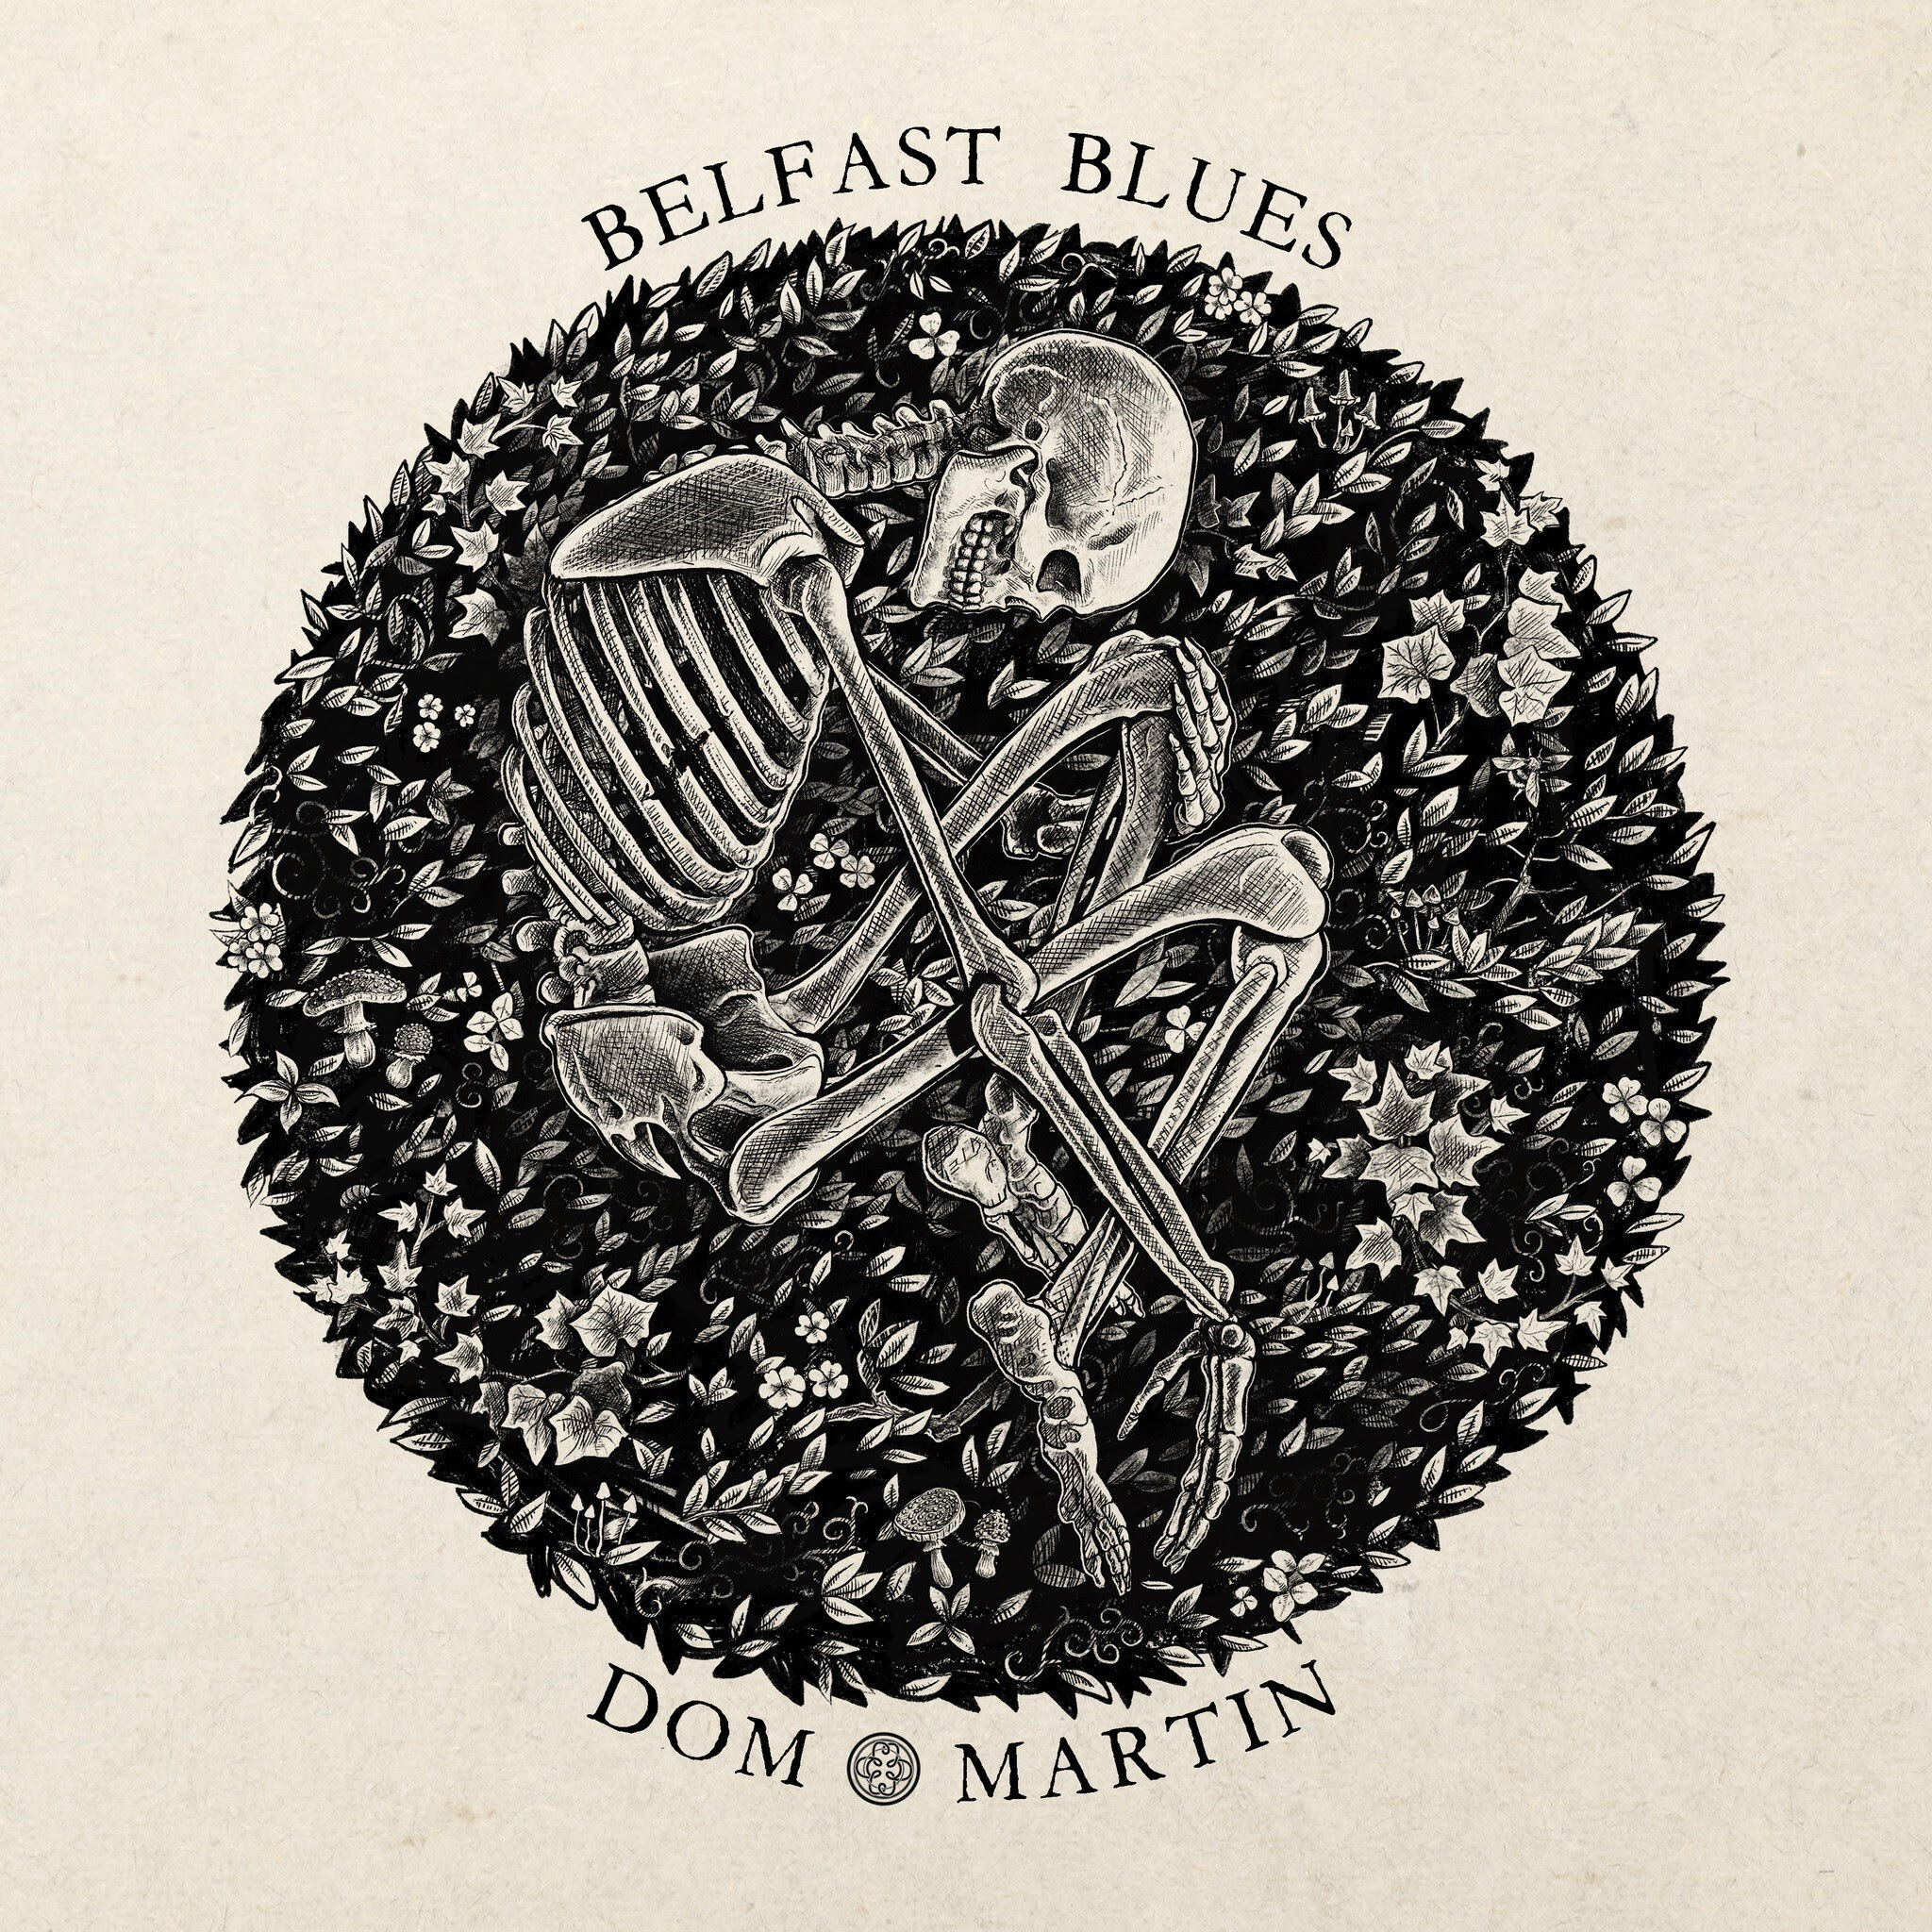 Irish Musician Dom Martin Releases "Belfast Blues"